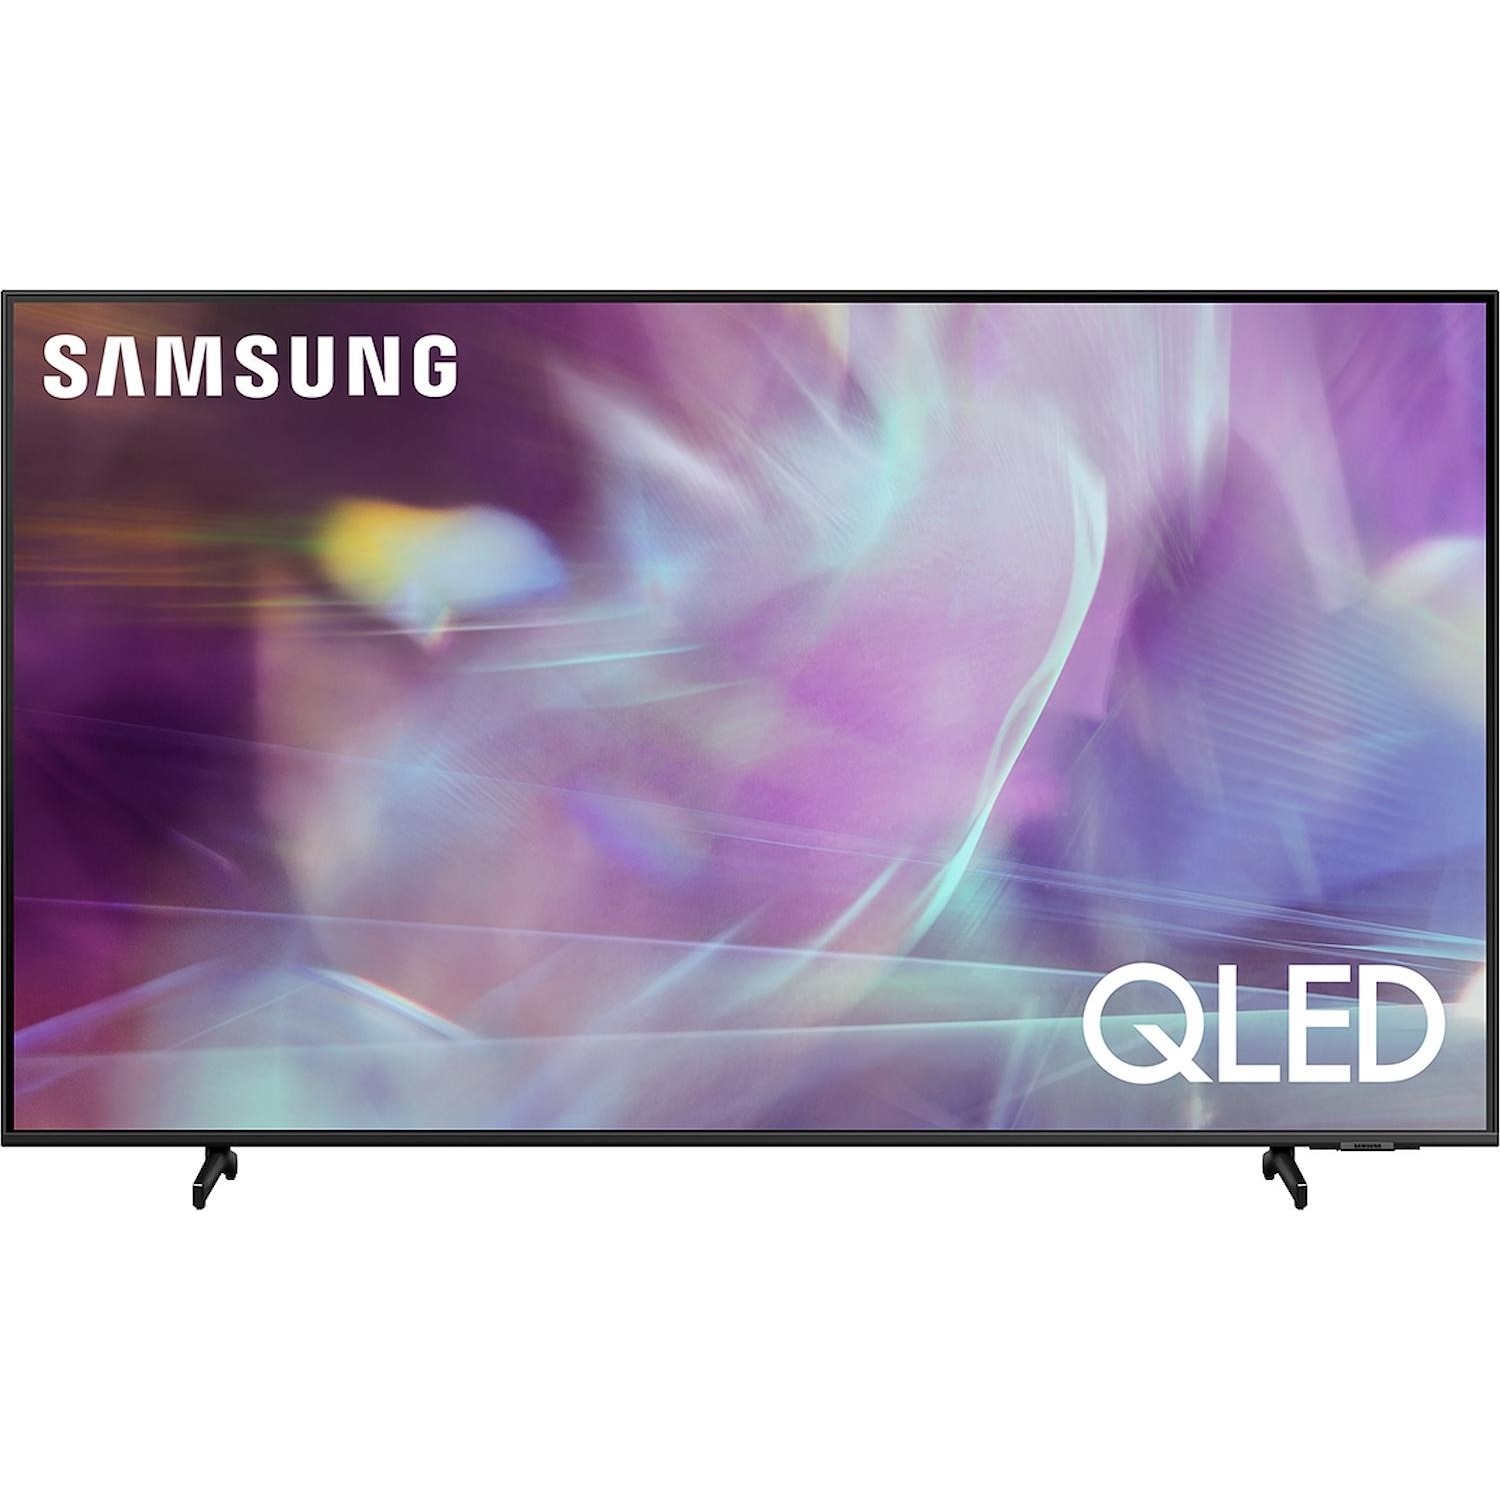 Immagine per TV LED Smart 4K UHD Samsung 43Q60AAU da DIMOStore